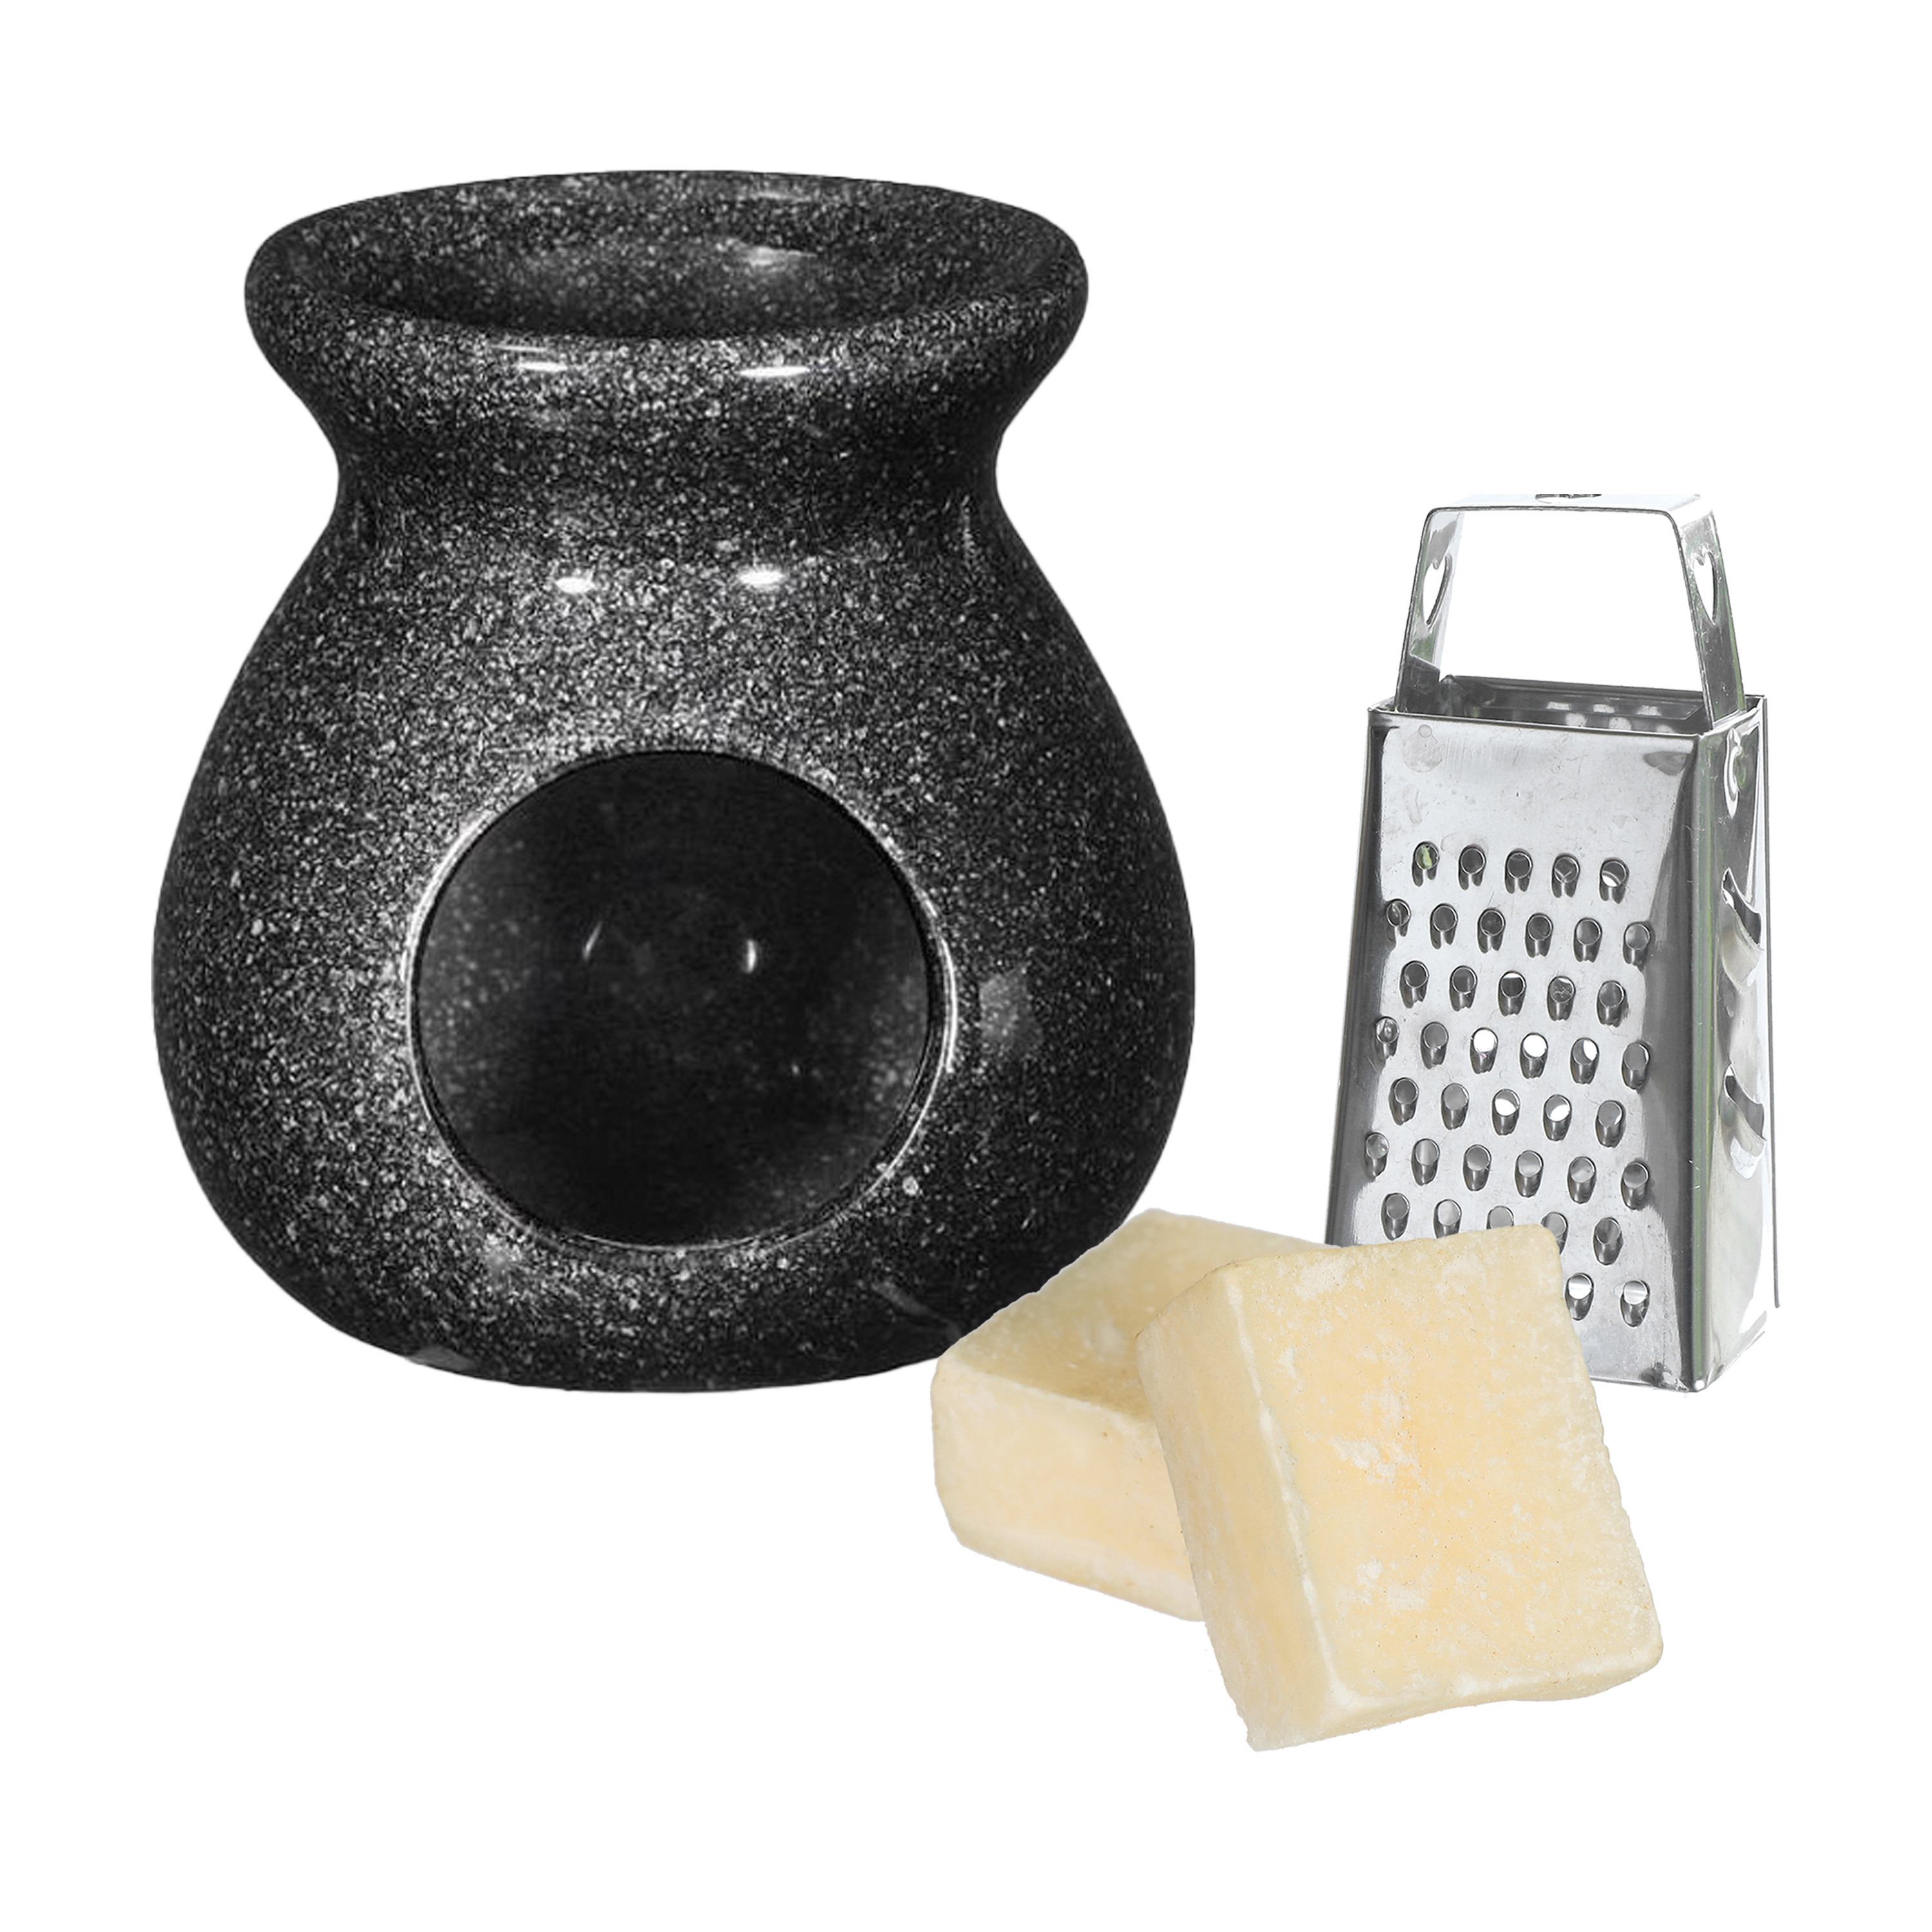 Amberblokjes-geurblokjes cadeauset cashmere geur inclusief geurbrander en mini rasp